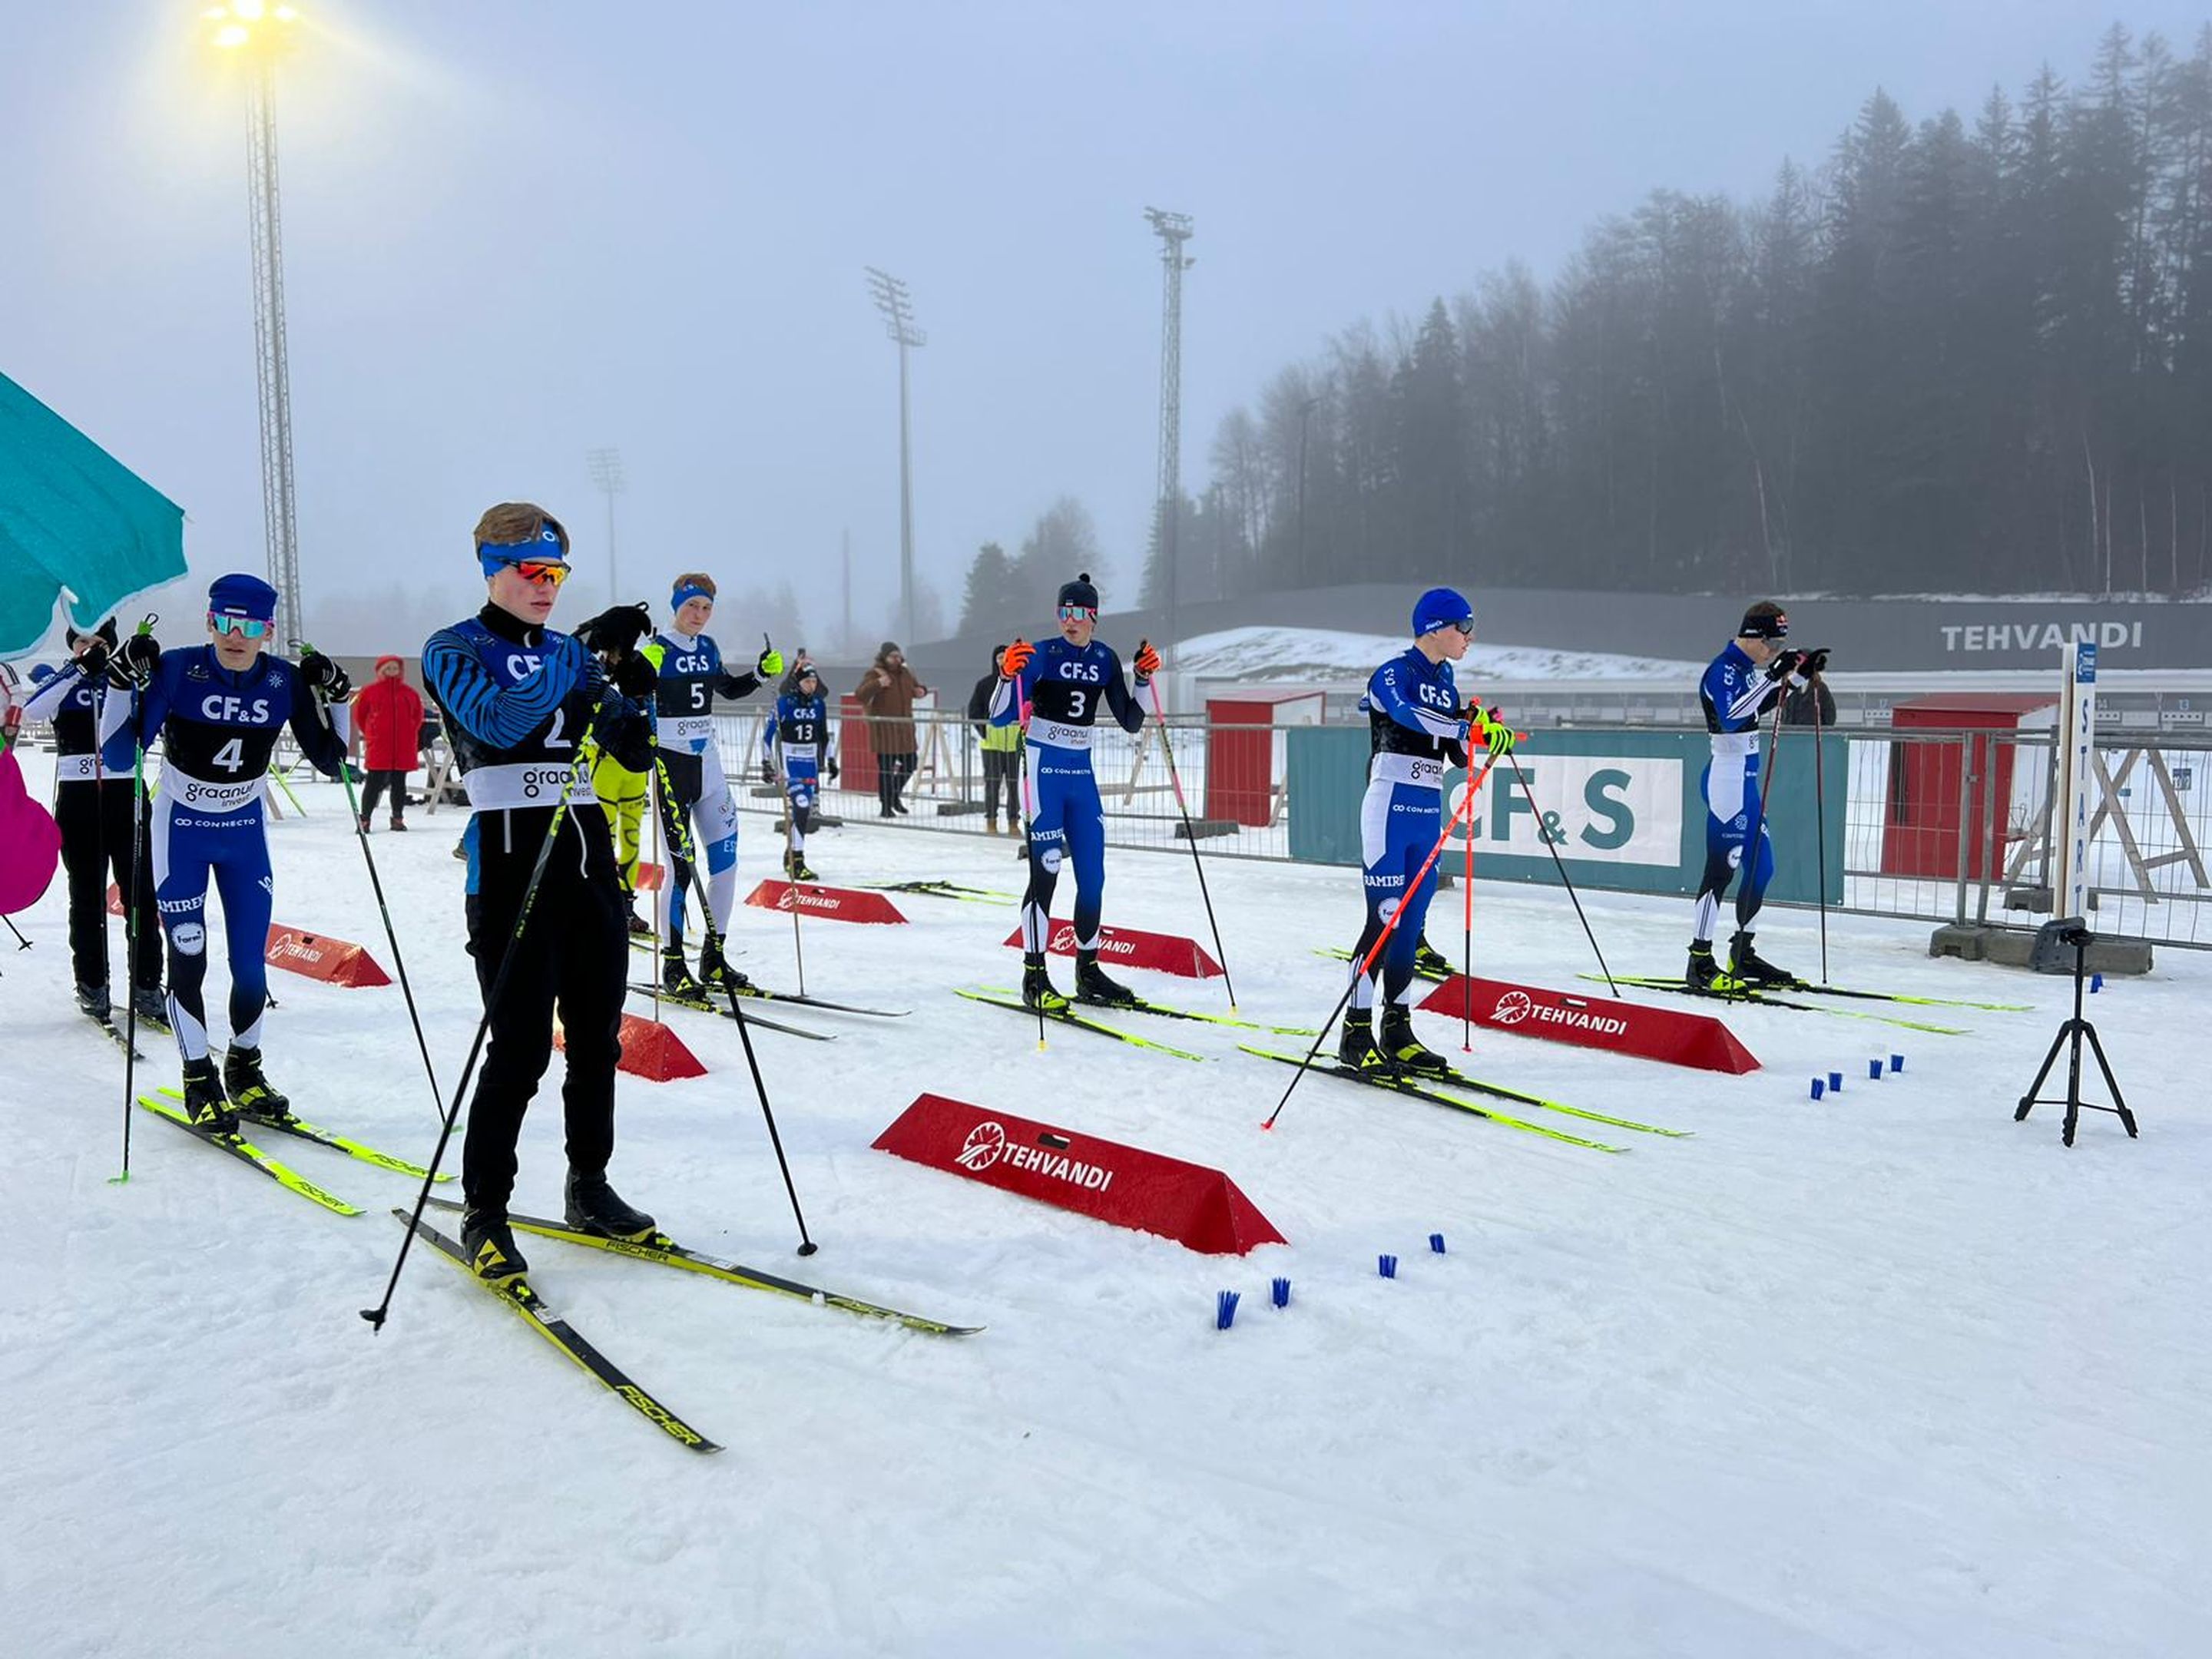 Cross-Country s tart of the Men's category (c) Estonian Ski Association